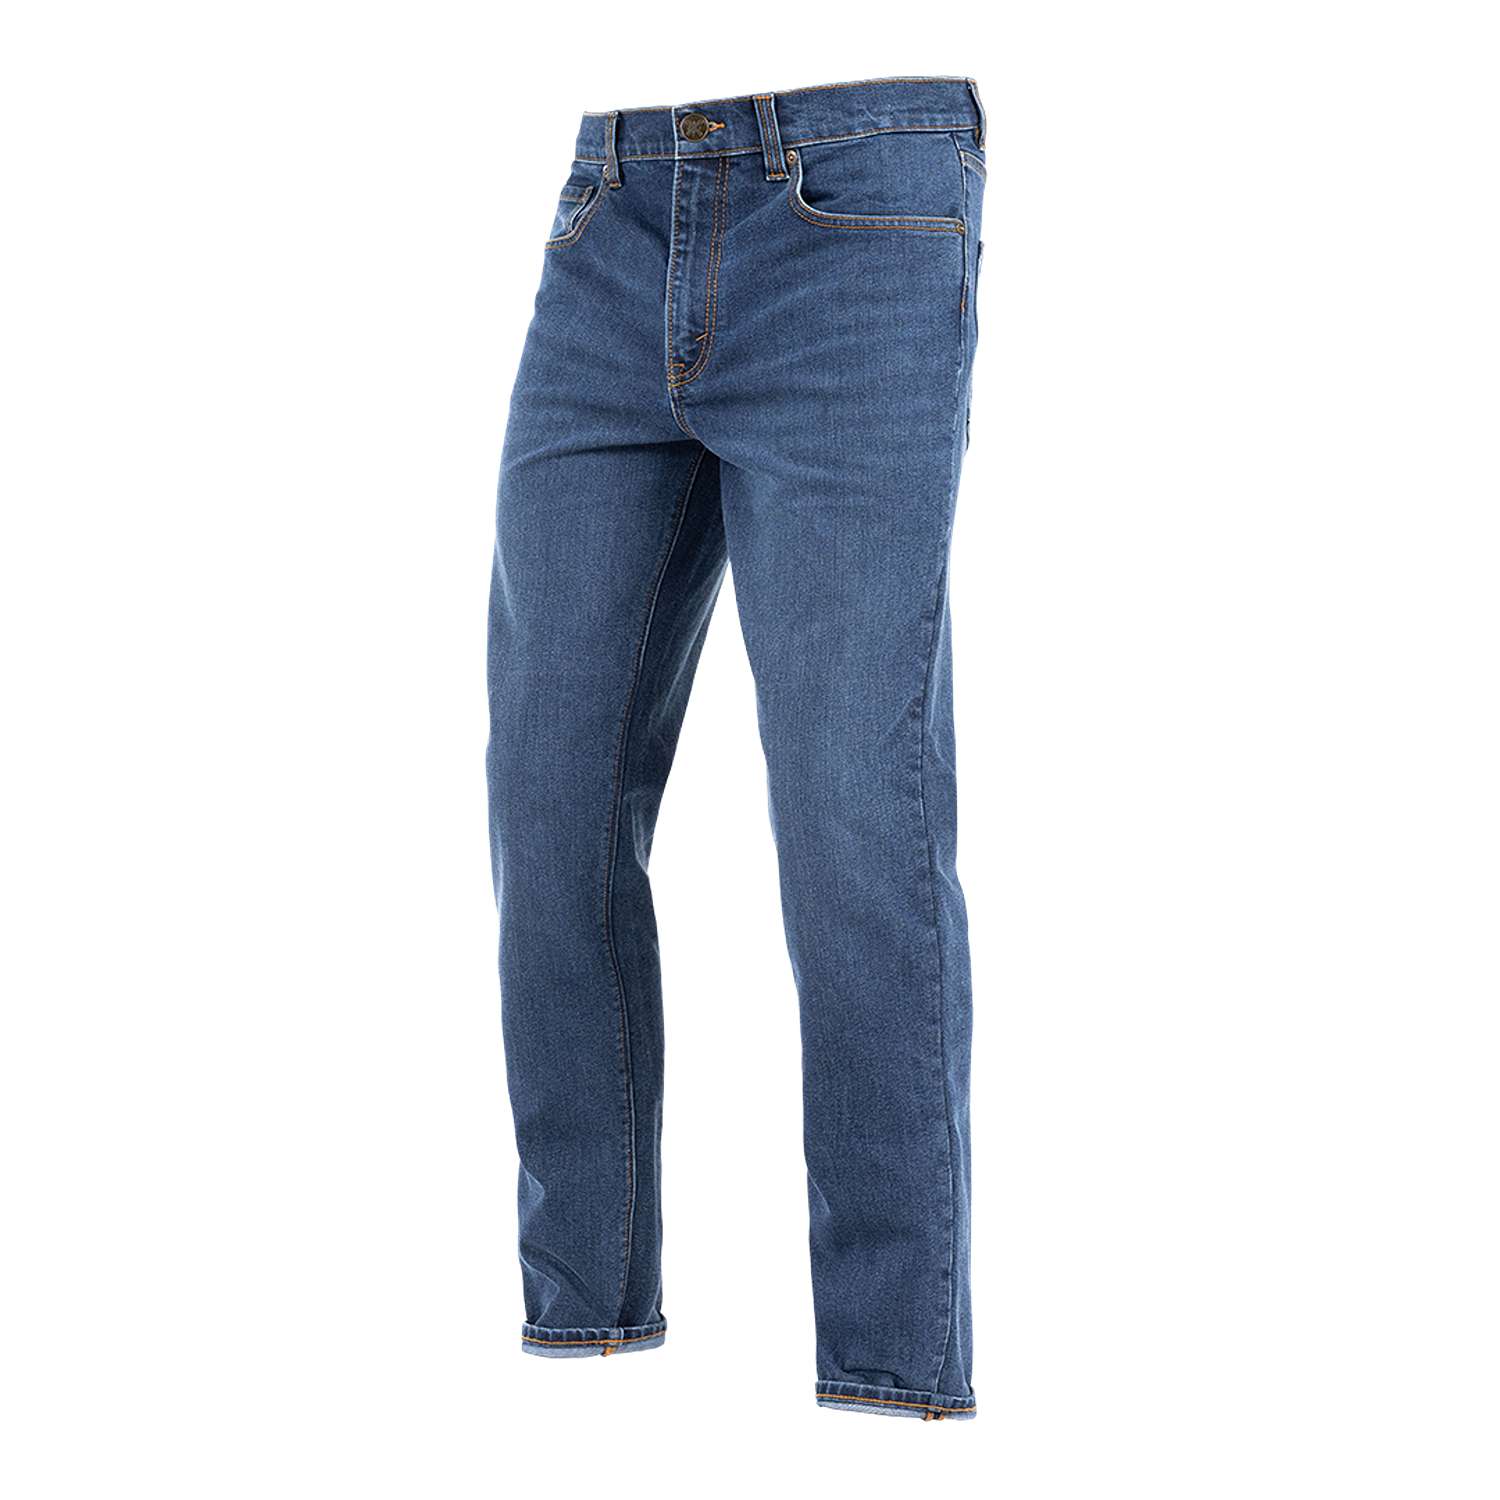 Image of John Doe Classic Tapered Jeans Indigo Size W31/L32 EN